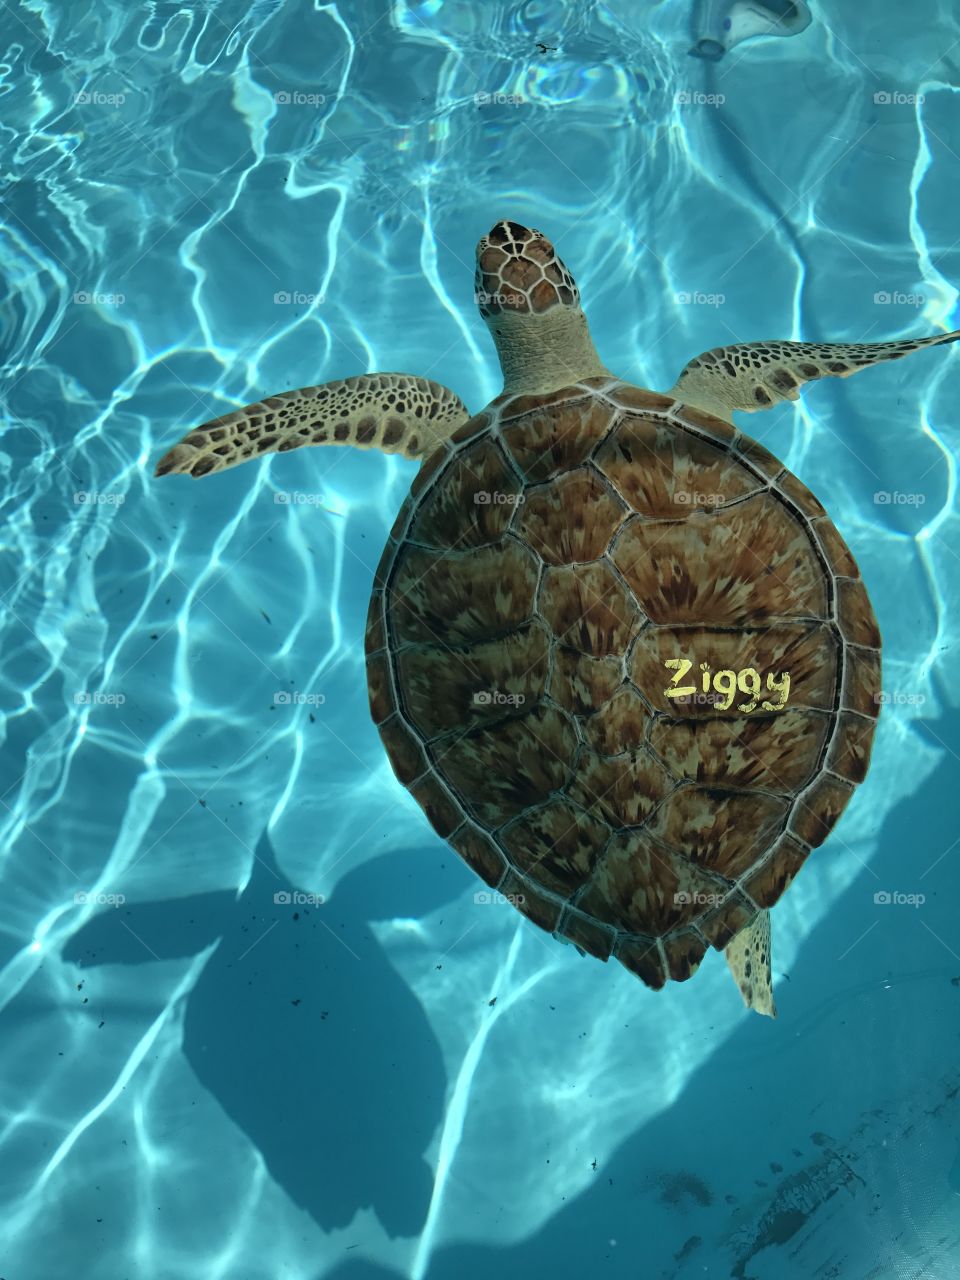 Ziggy the turtle!!